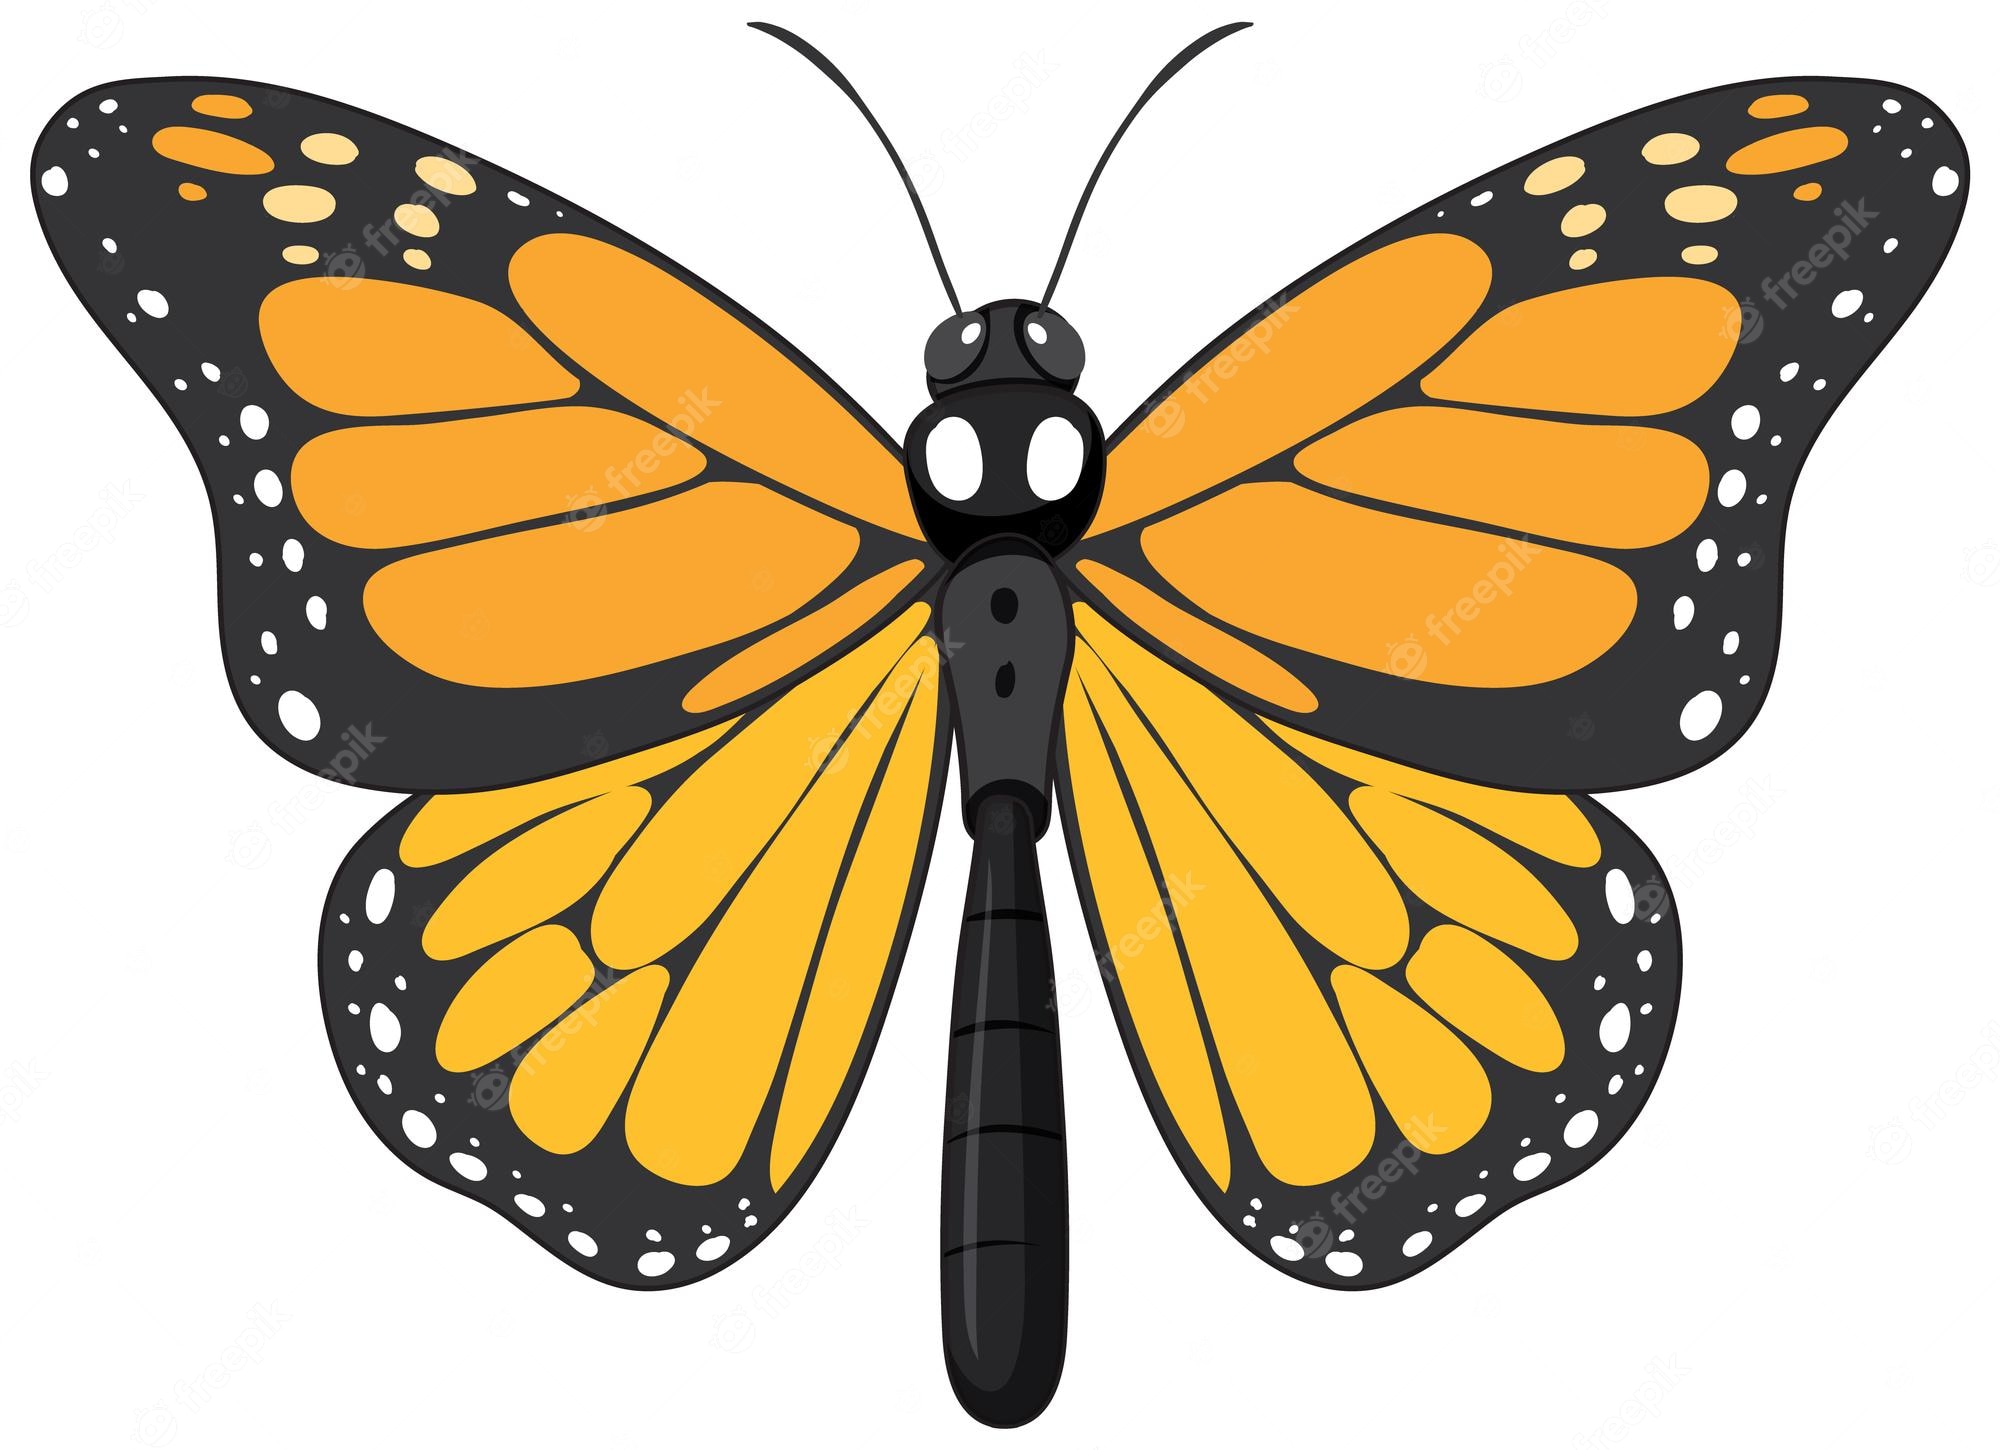 Monarch Butterfly Cartoon Image